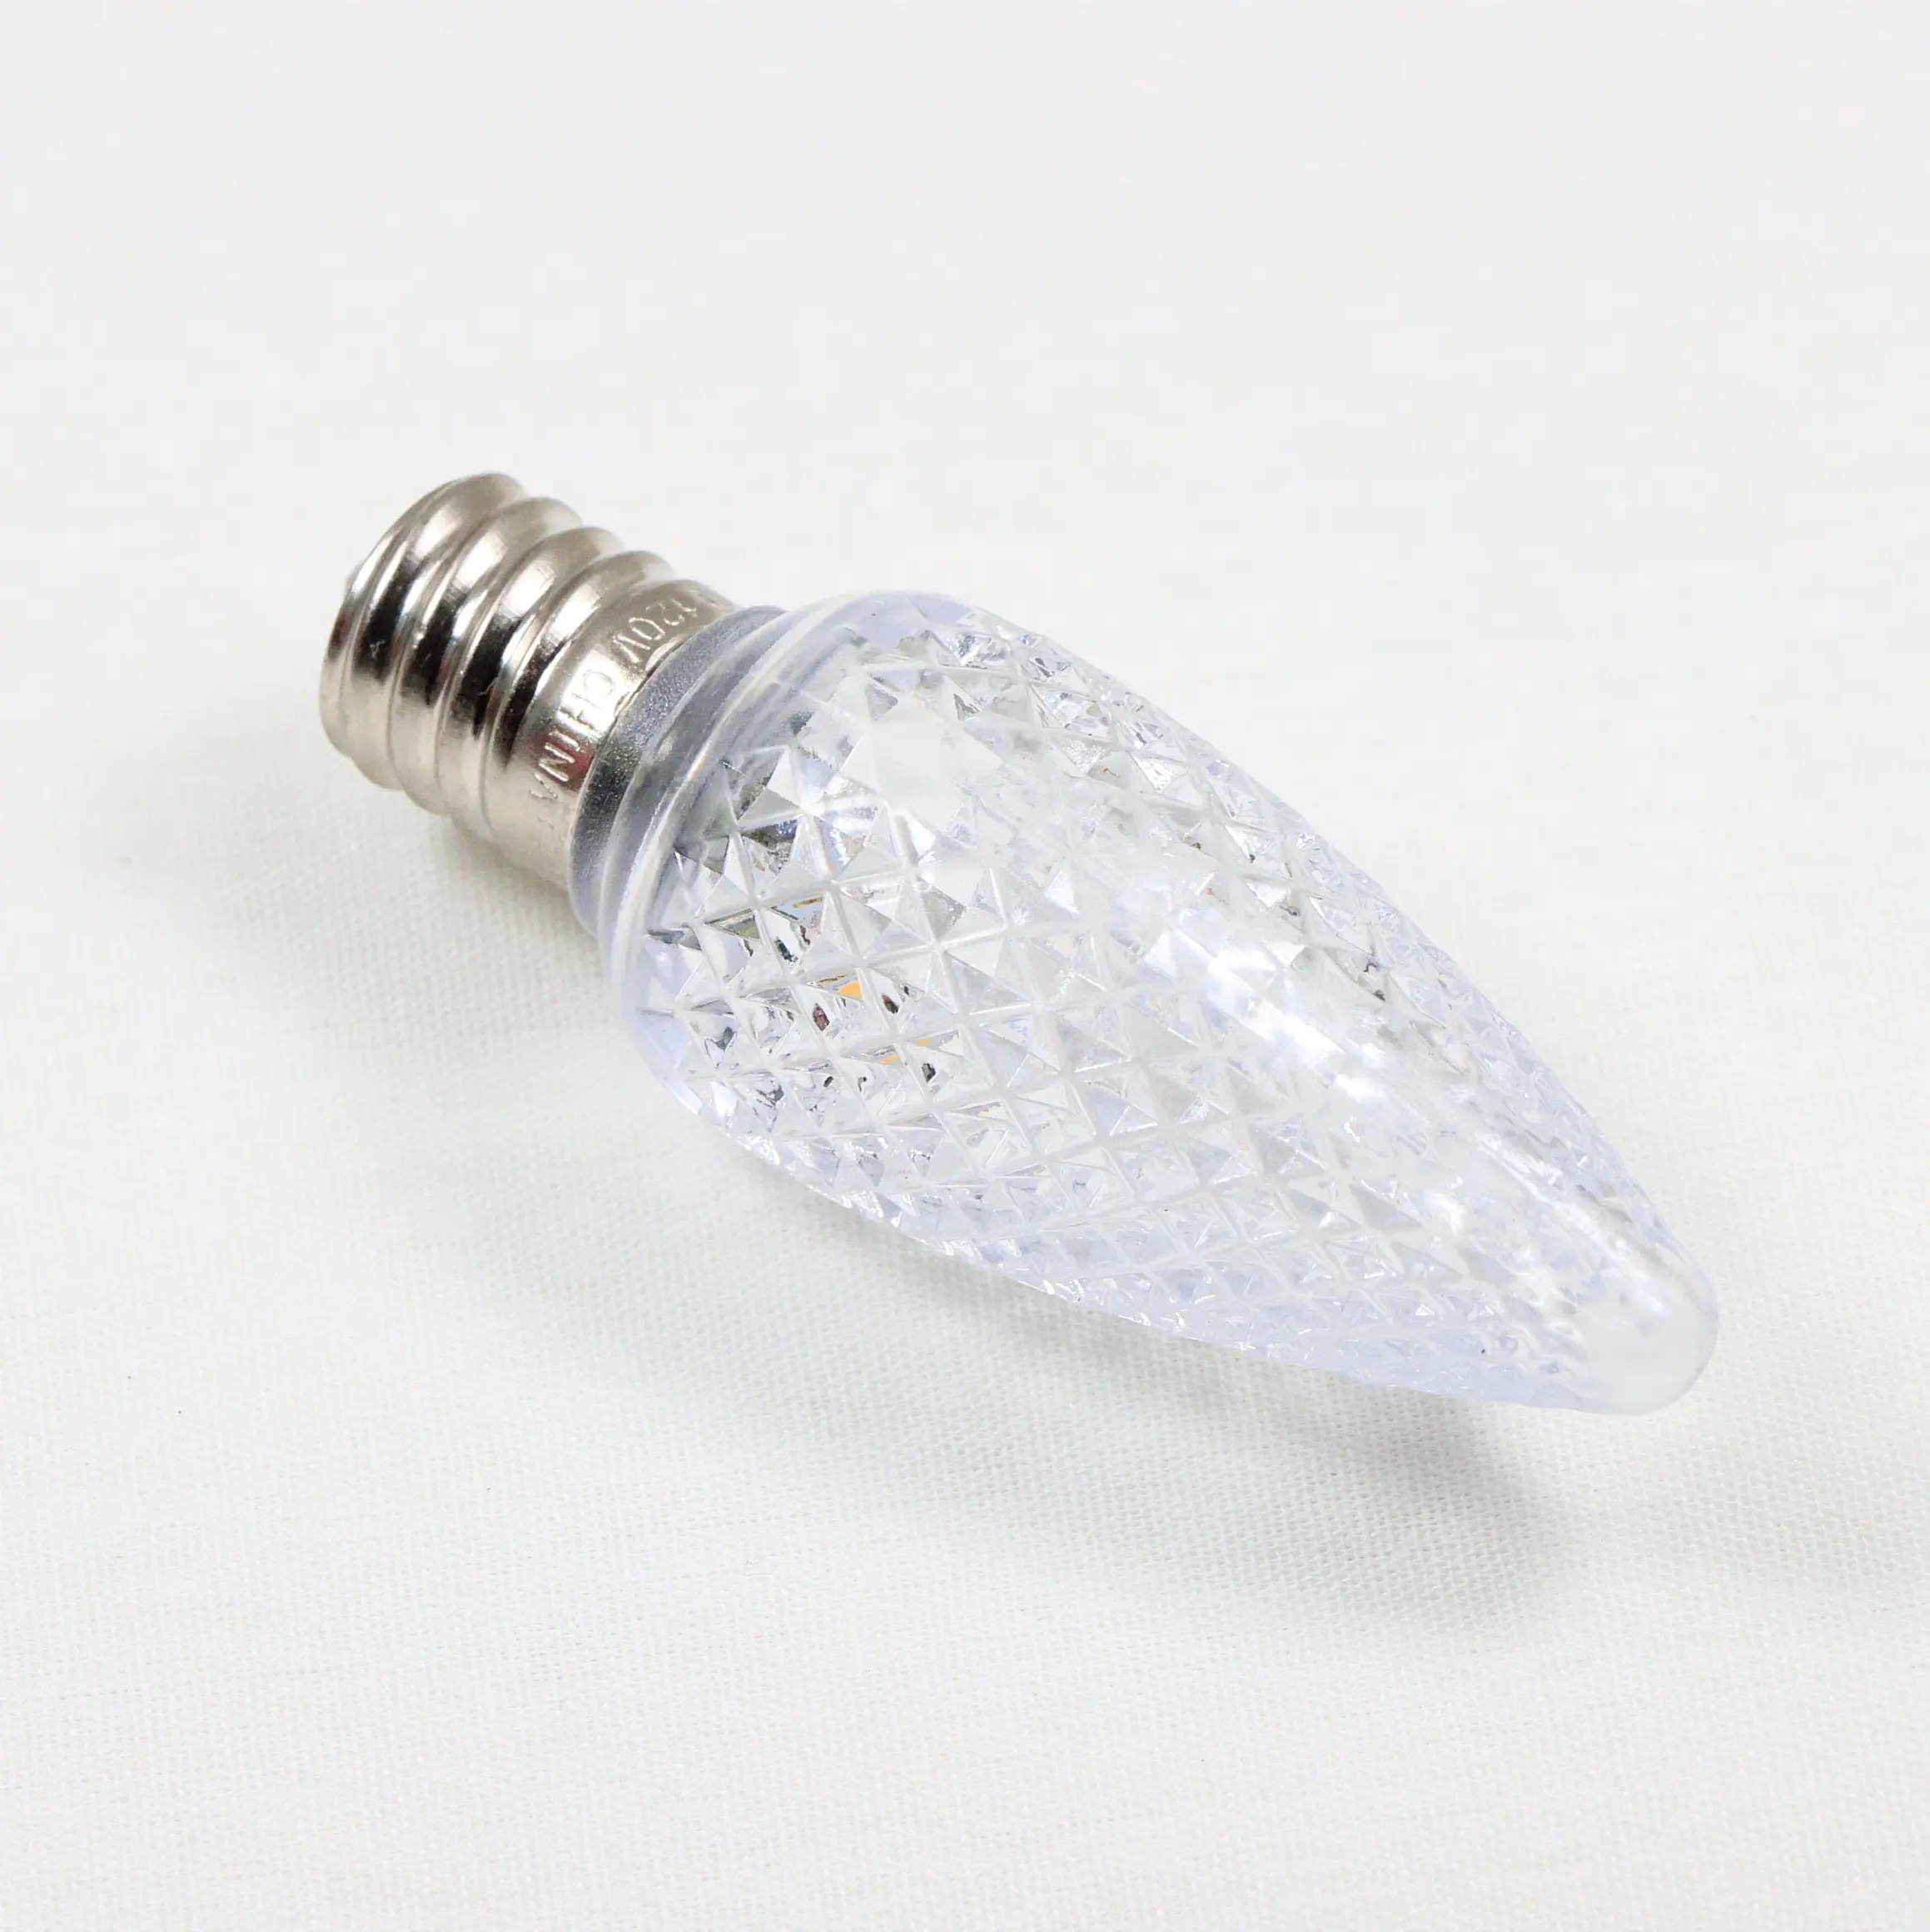 Bulb Bulb Led Light 0.8w C9 Christmas Lights LED C9 E17 Faceted Replacement Bulbs